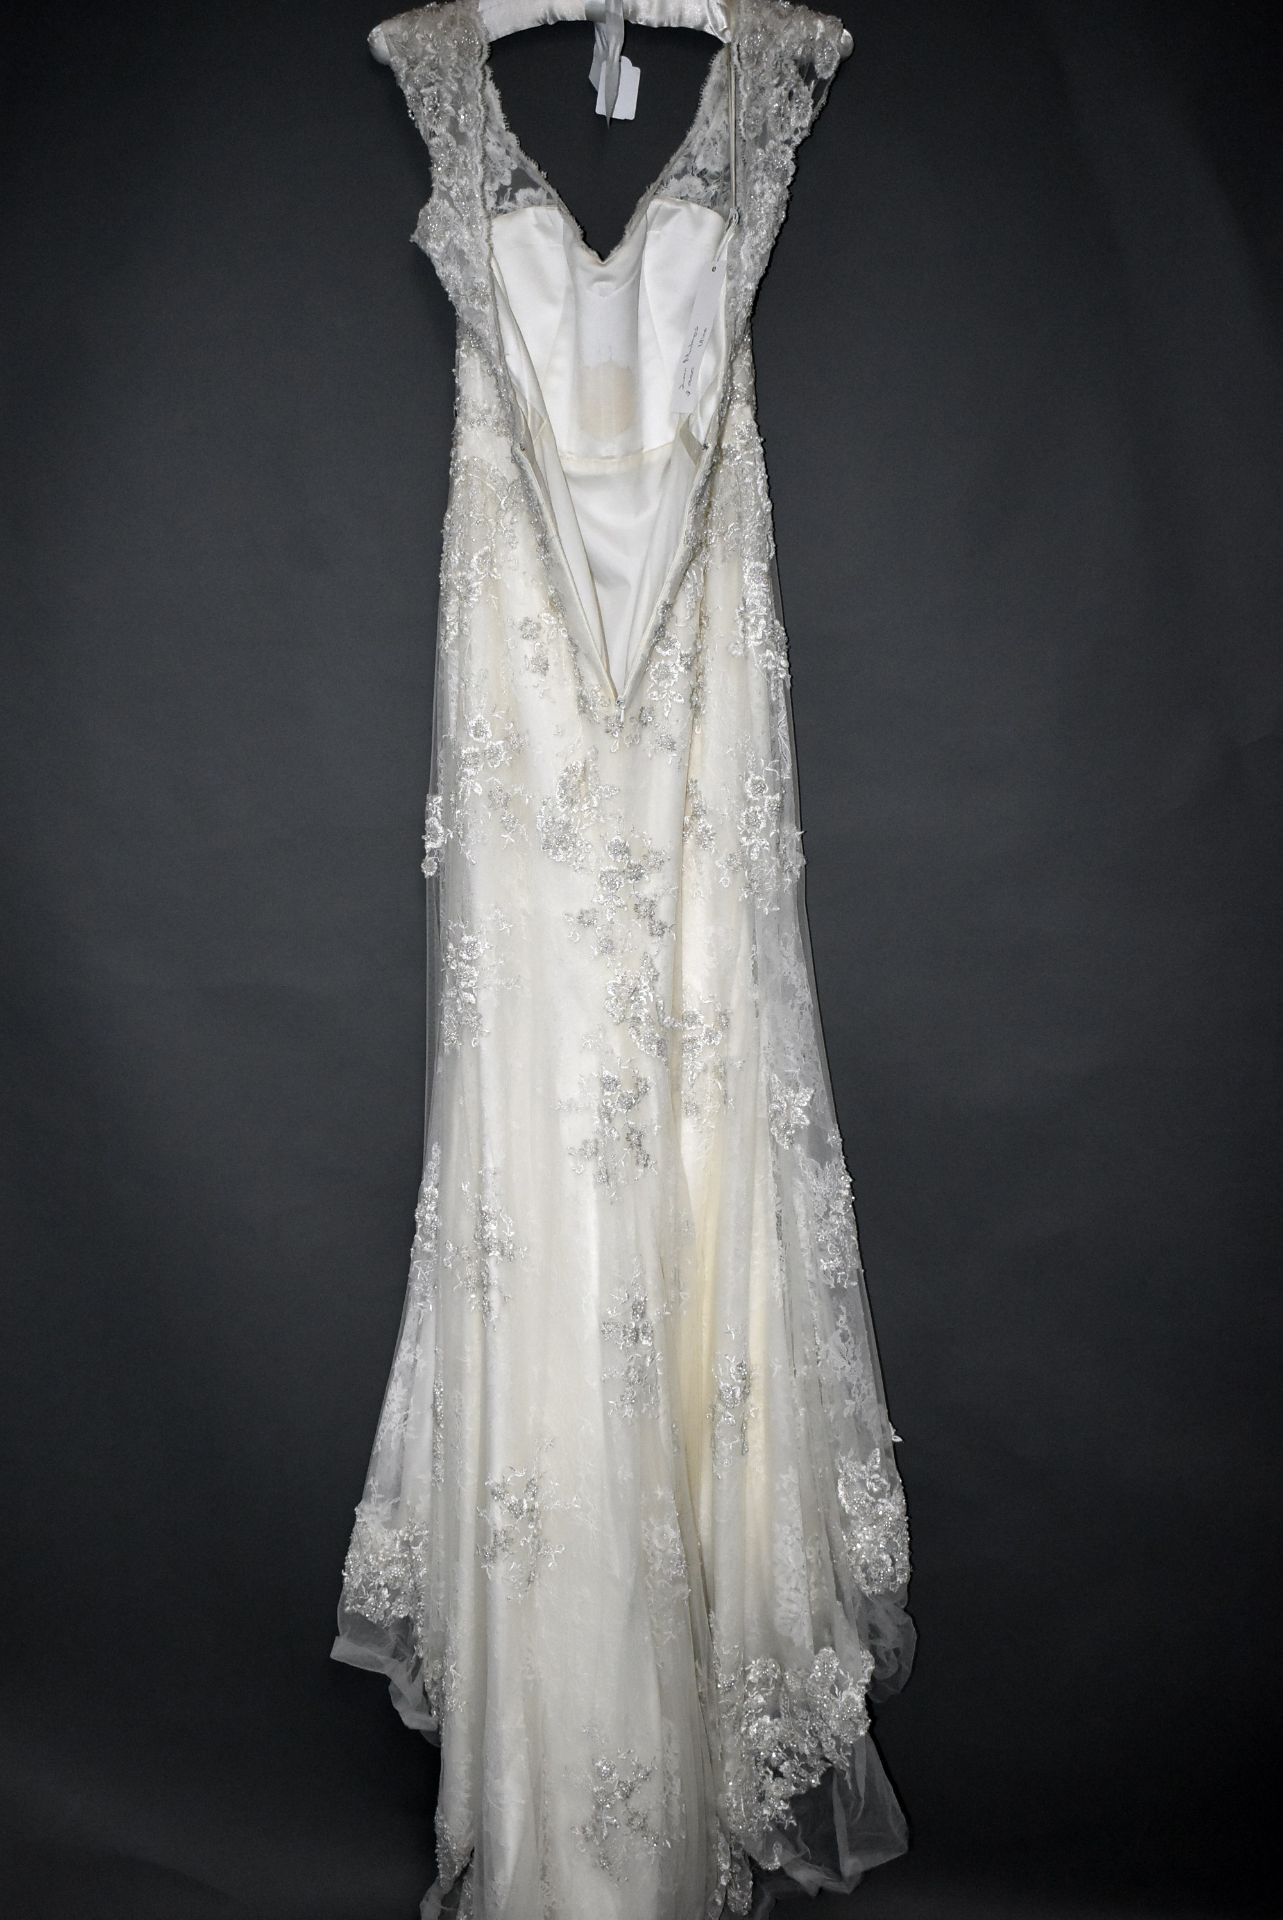 1 x LUSAN MANDONGUS Lace Overlay Designer Wedding Dress Bridal Gown RRP £1,000 UK 12 - Image 2 of 7